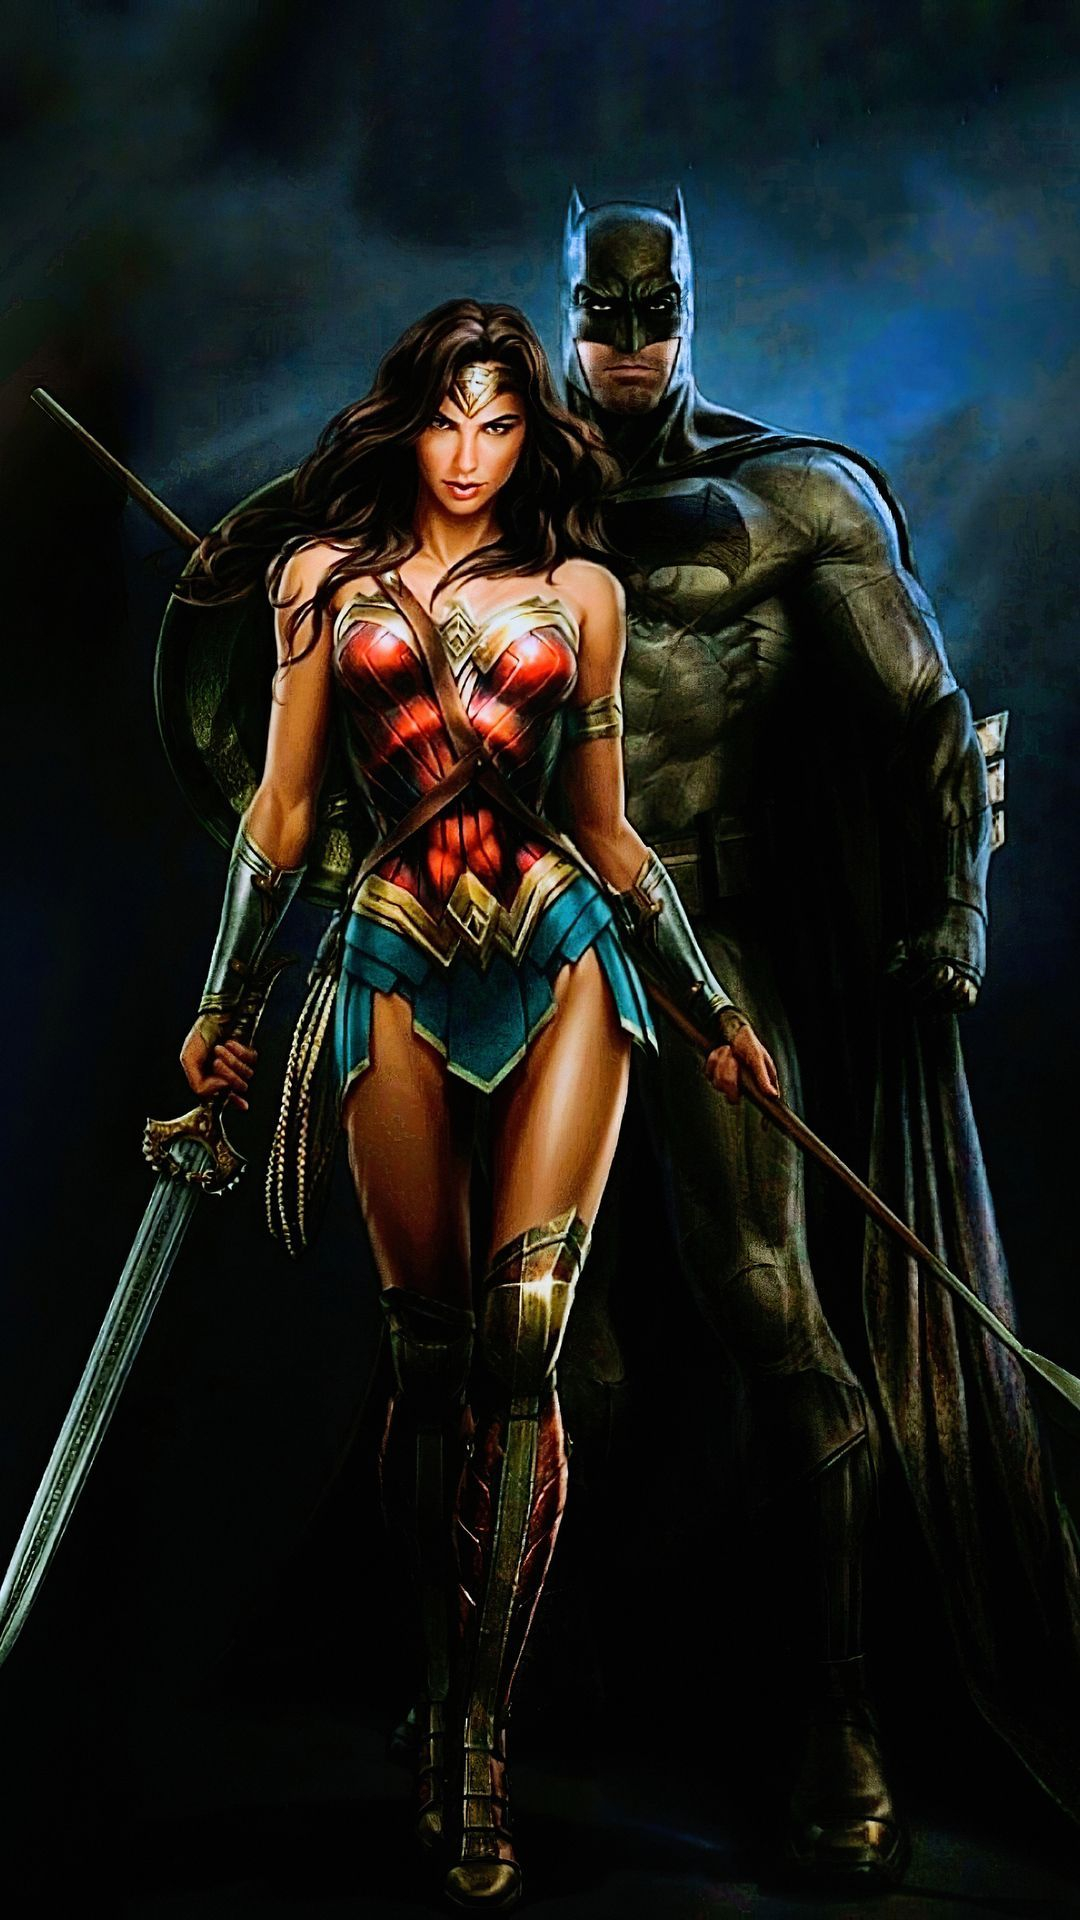 1080x1920 Batman Wonder Woman iPhone Wallpapers Top Free Batman Wonder Woman iPhone Backgrounds